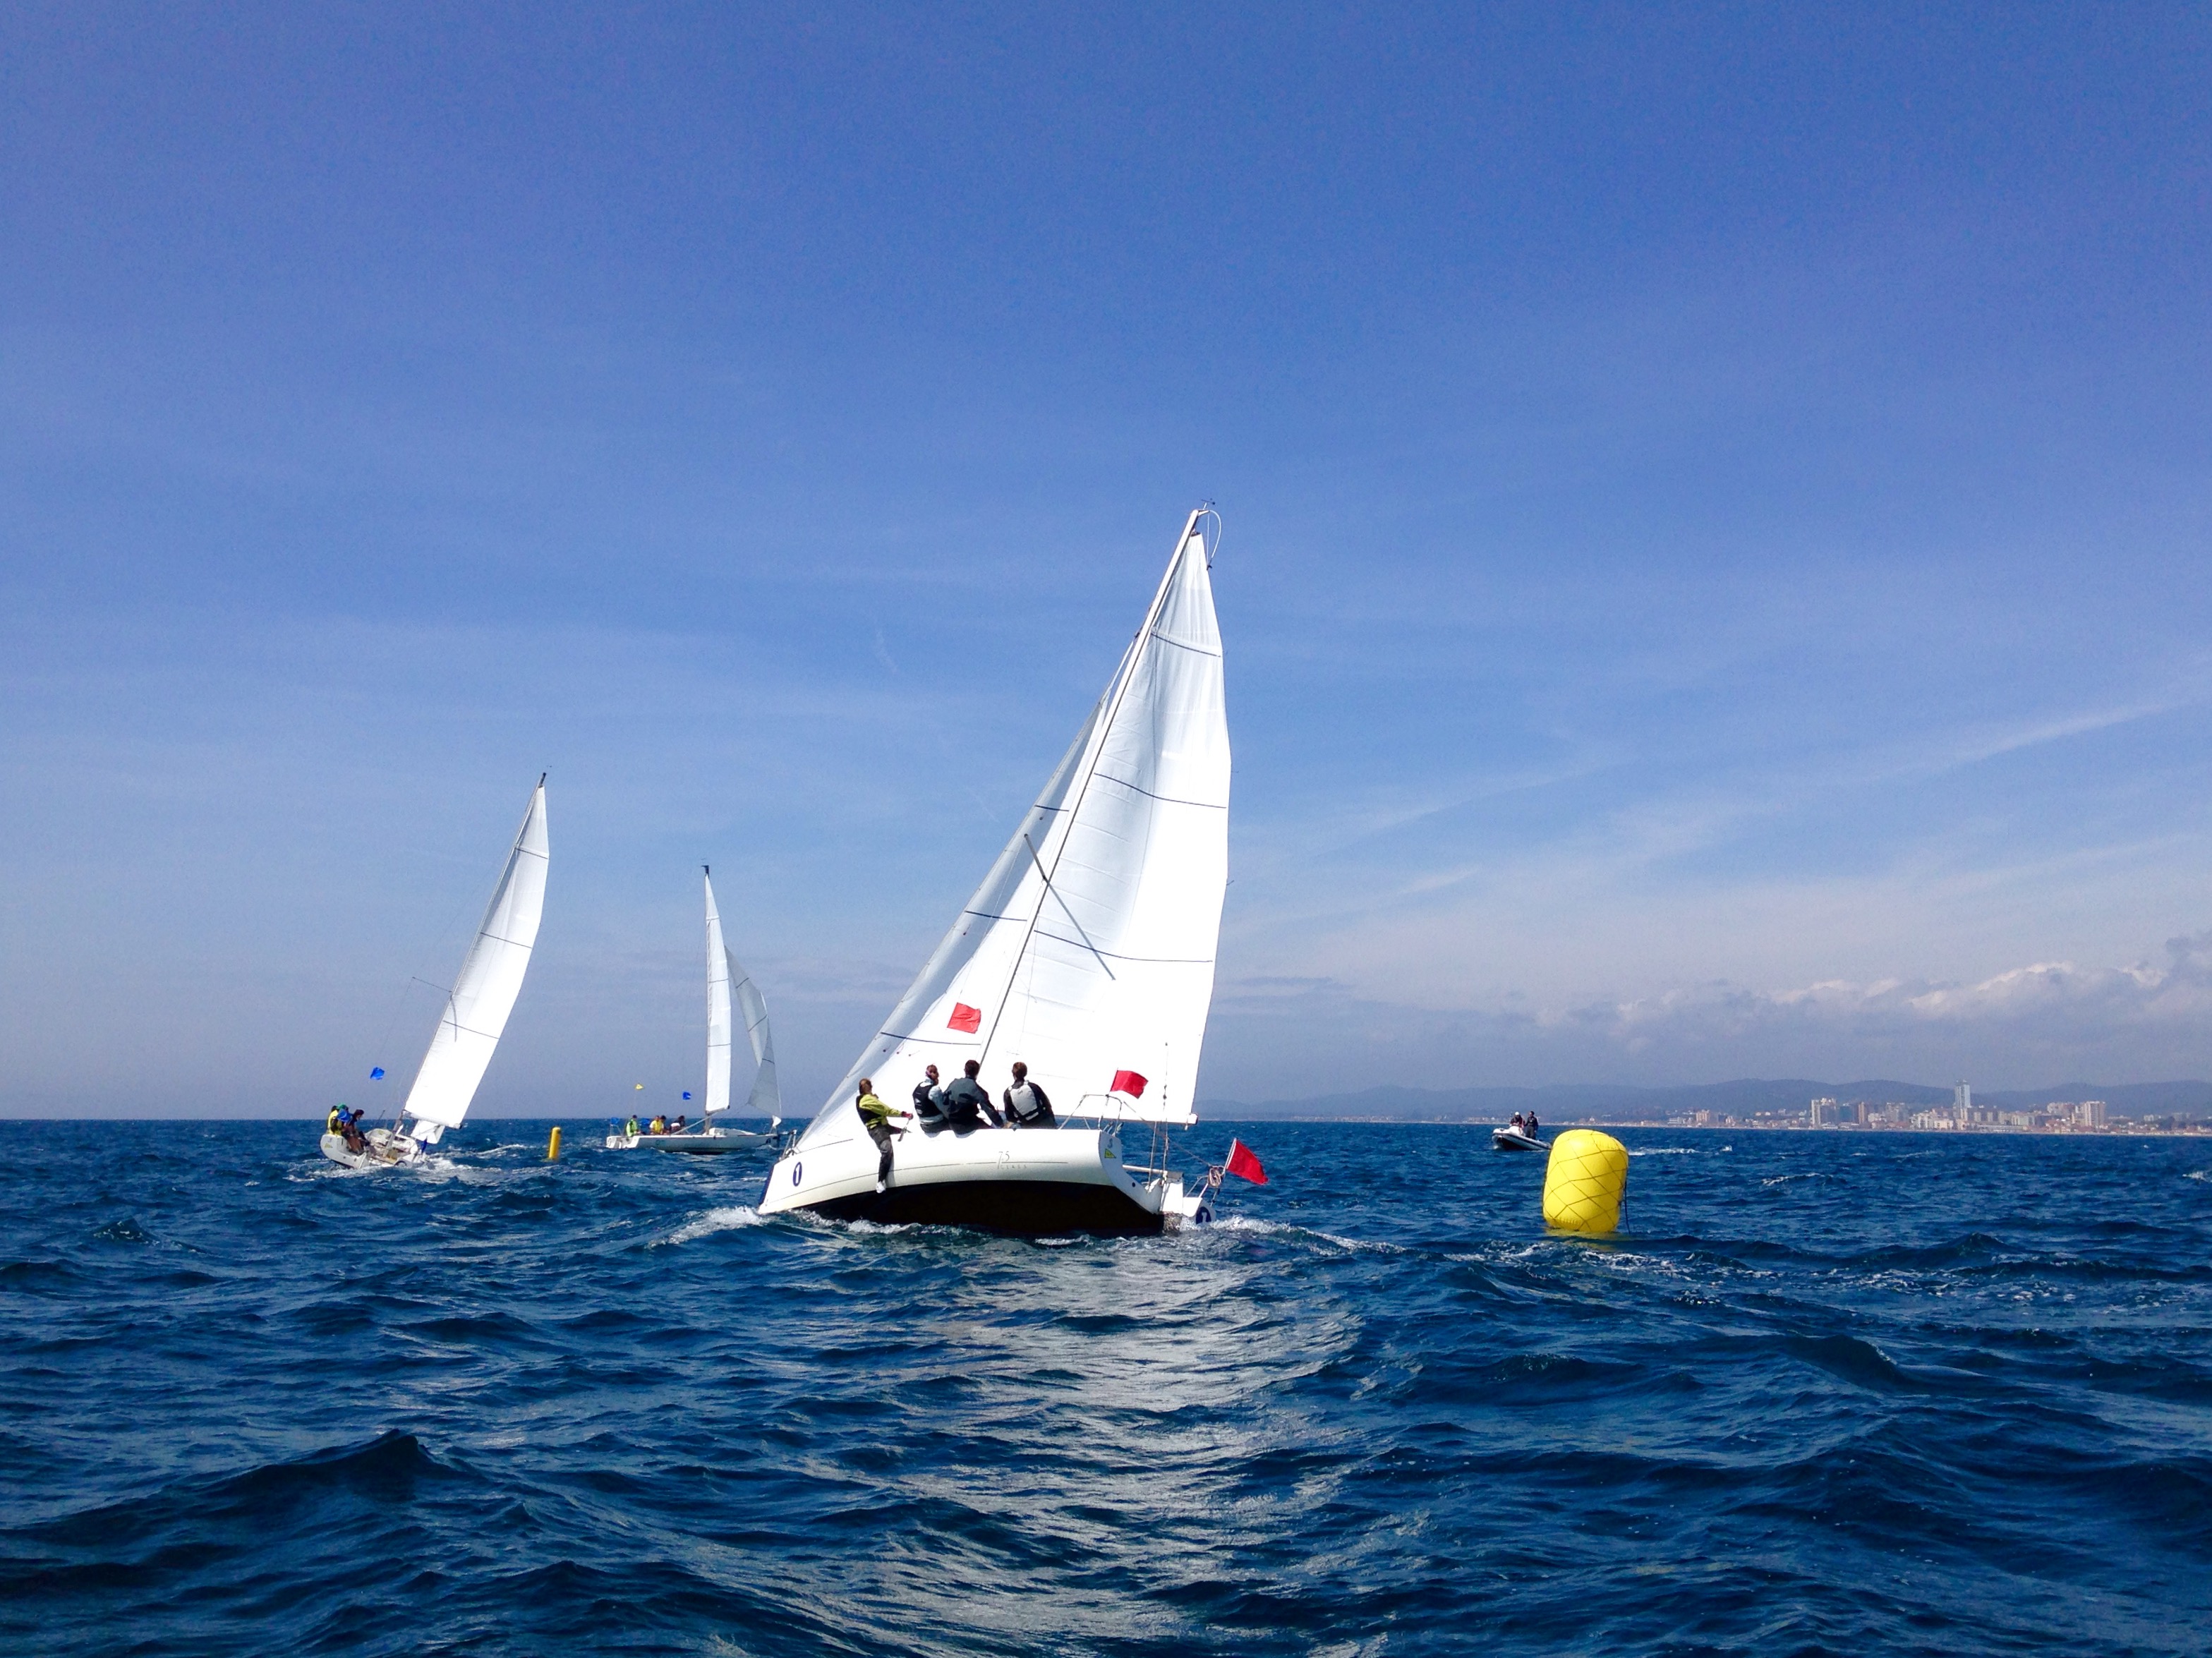 YCCS AL 2K TEAM RACING DI ROMA - News - Yacht Club Costa Smeralda